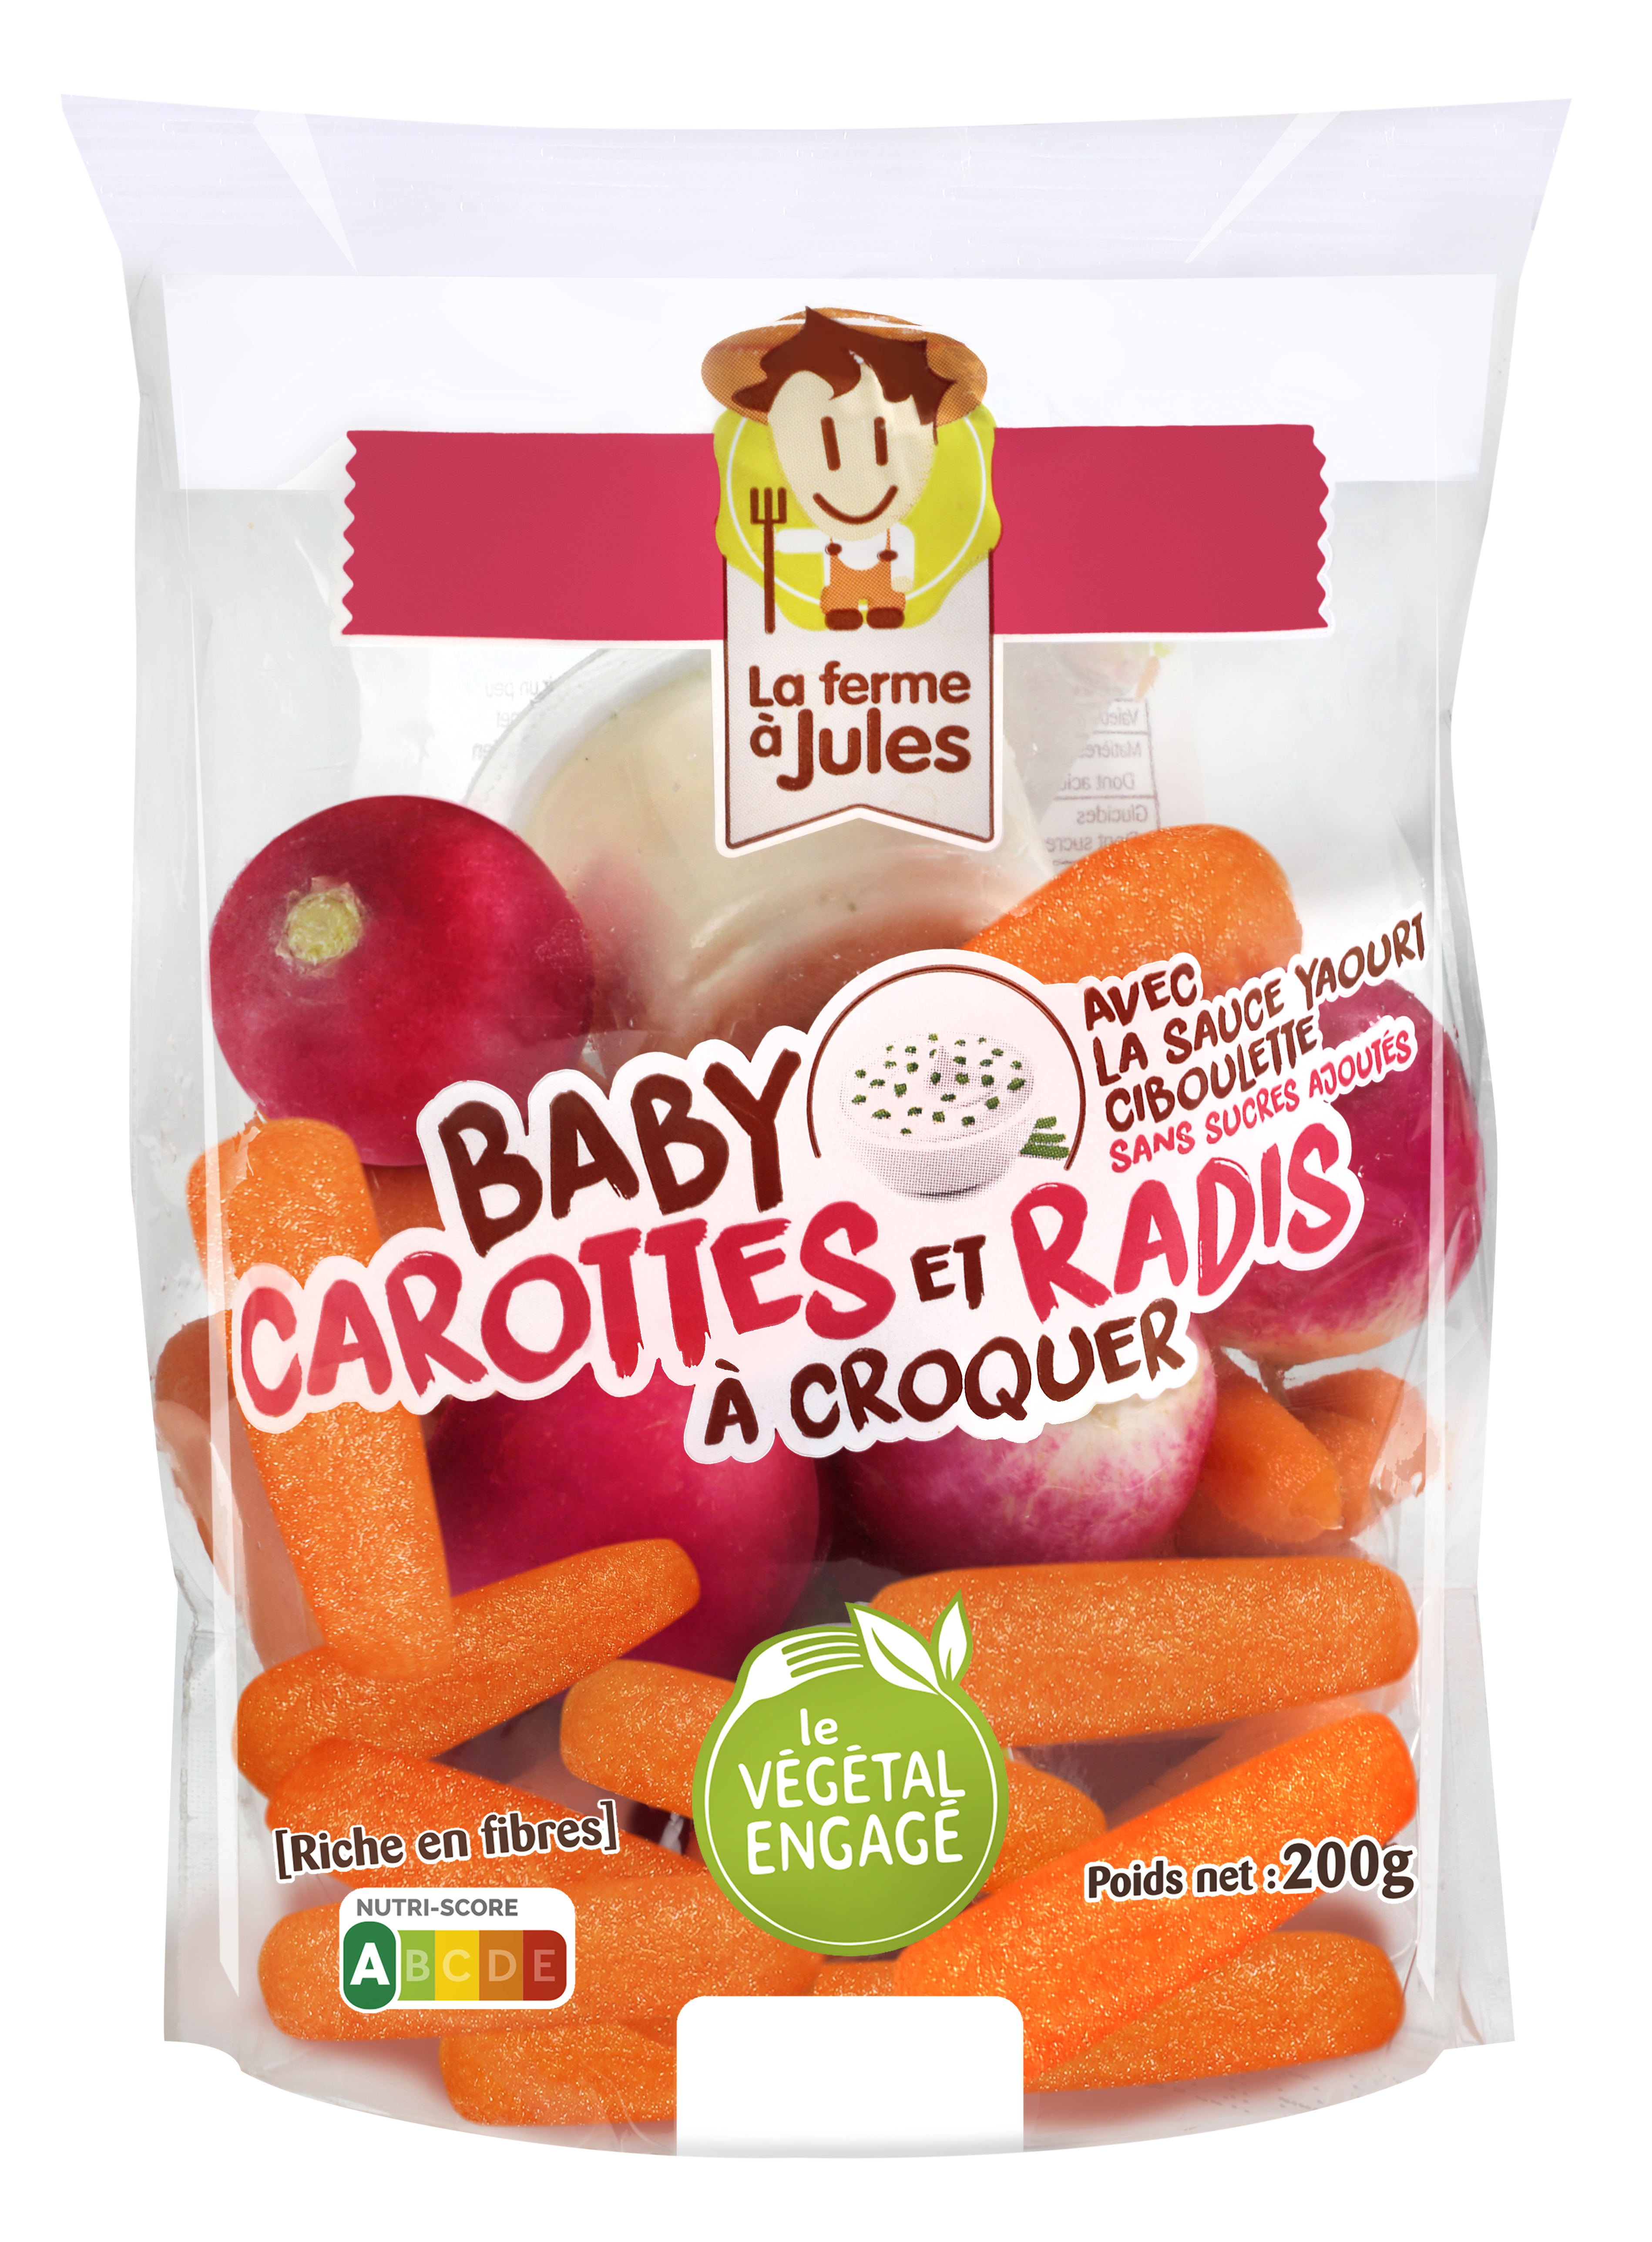 Baby carottes duo de radis & sauce